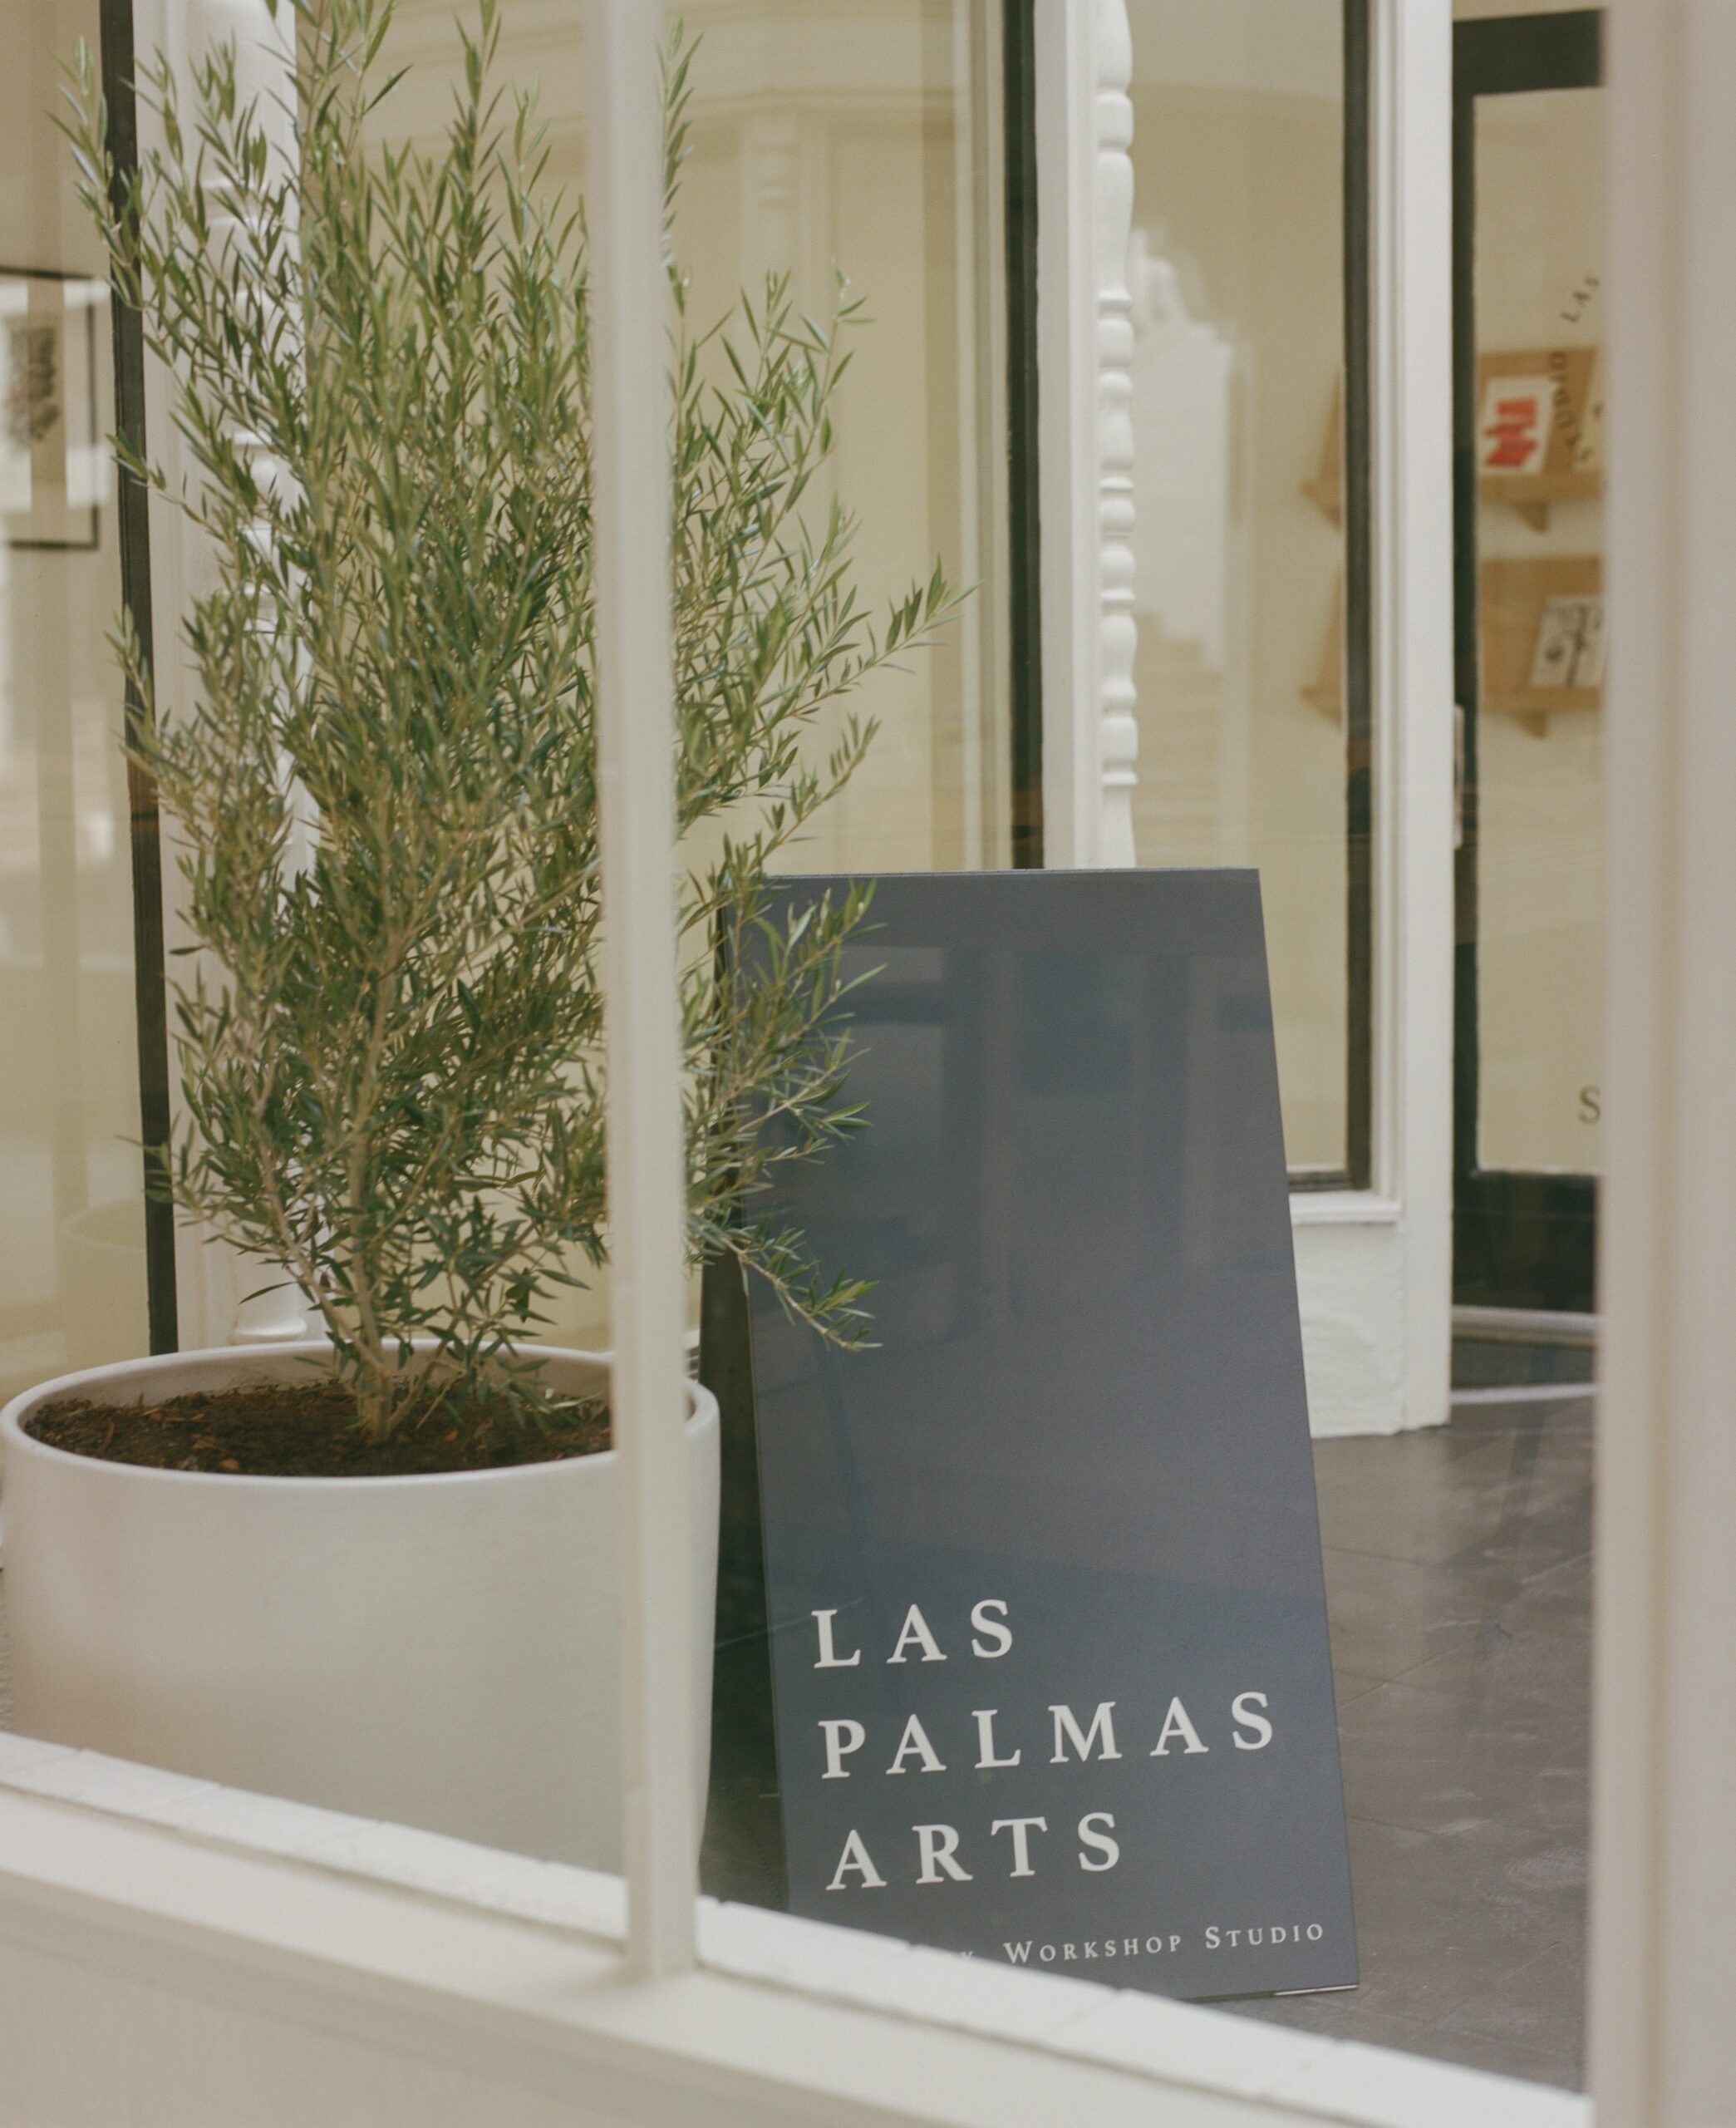 Las Palmas Arts Workshop Studio signage